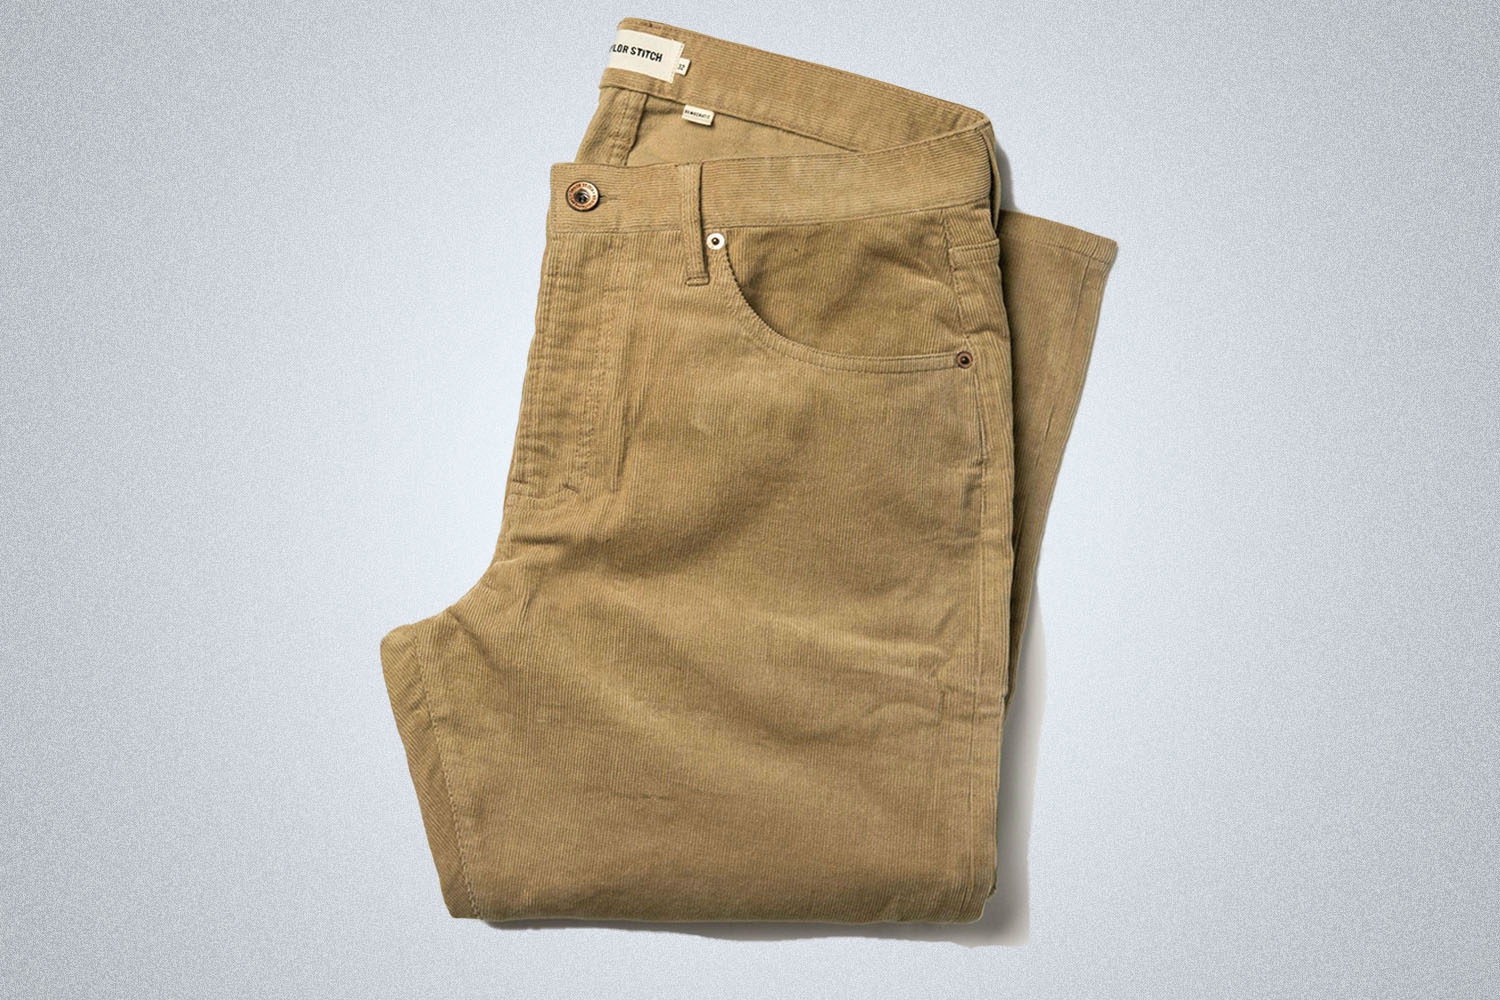 a pair of khaki, democratic-fitting pants